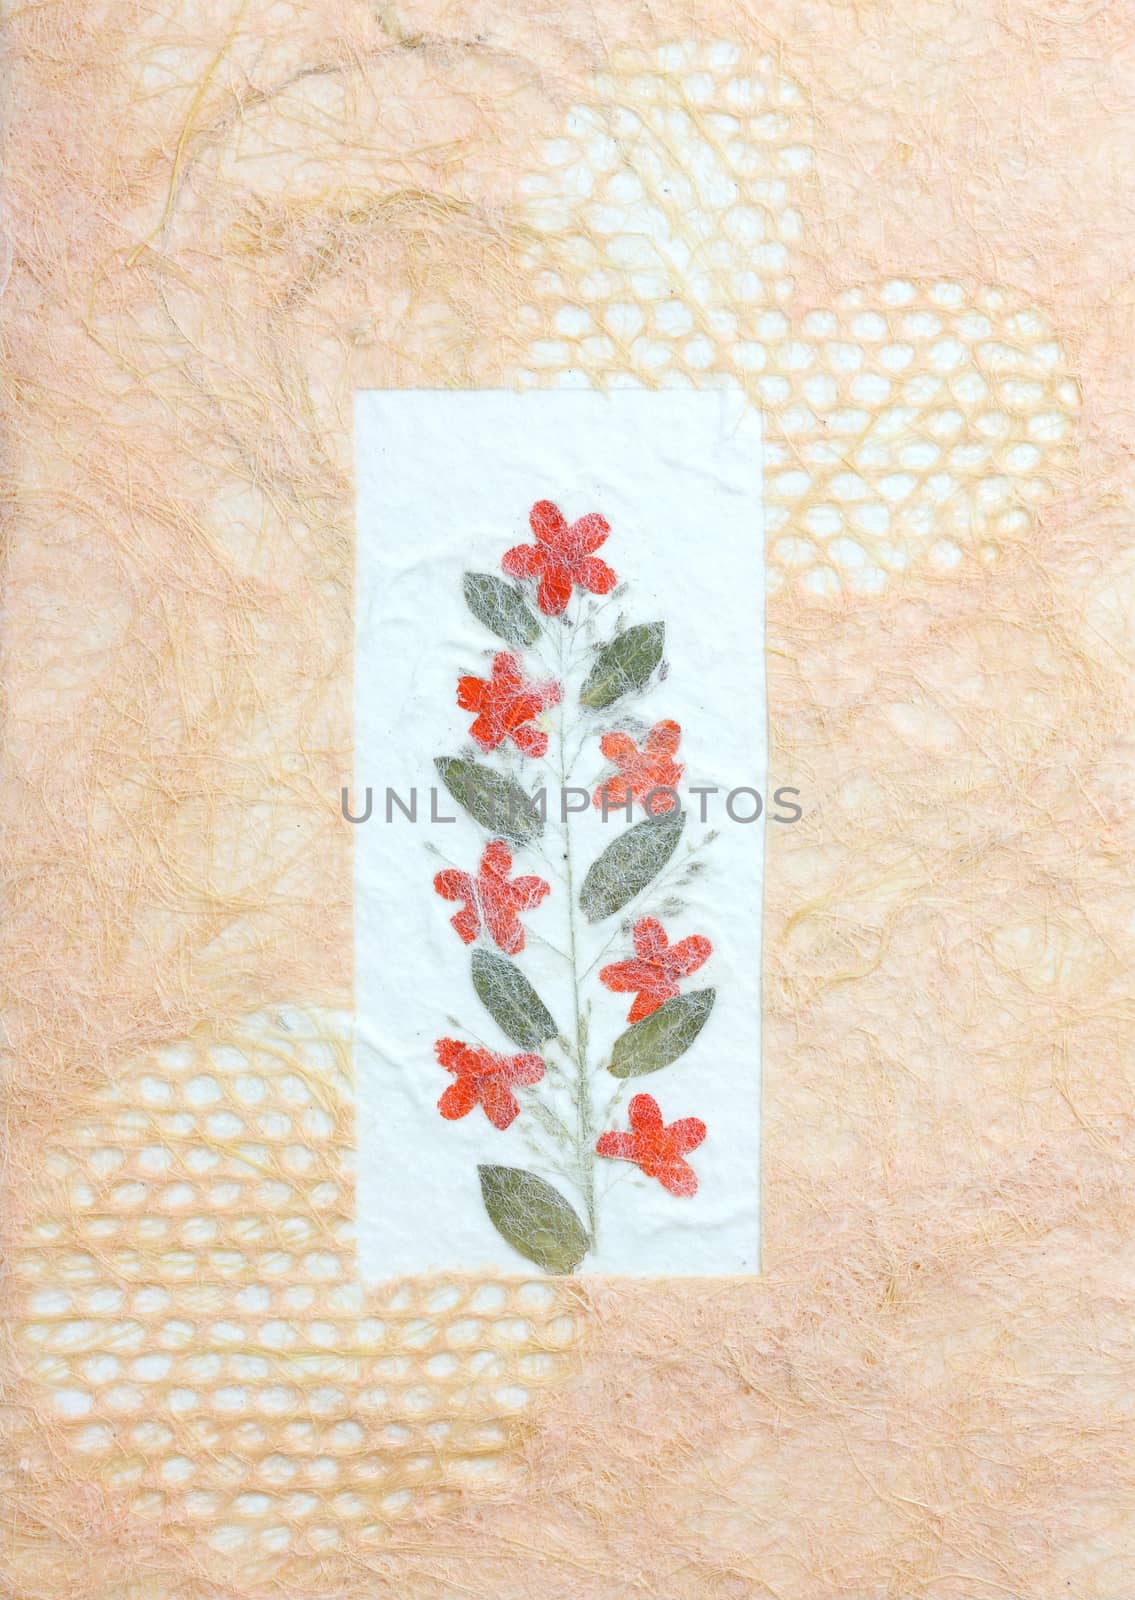 papercraft flower in orange background by piyato